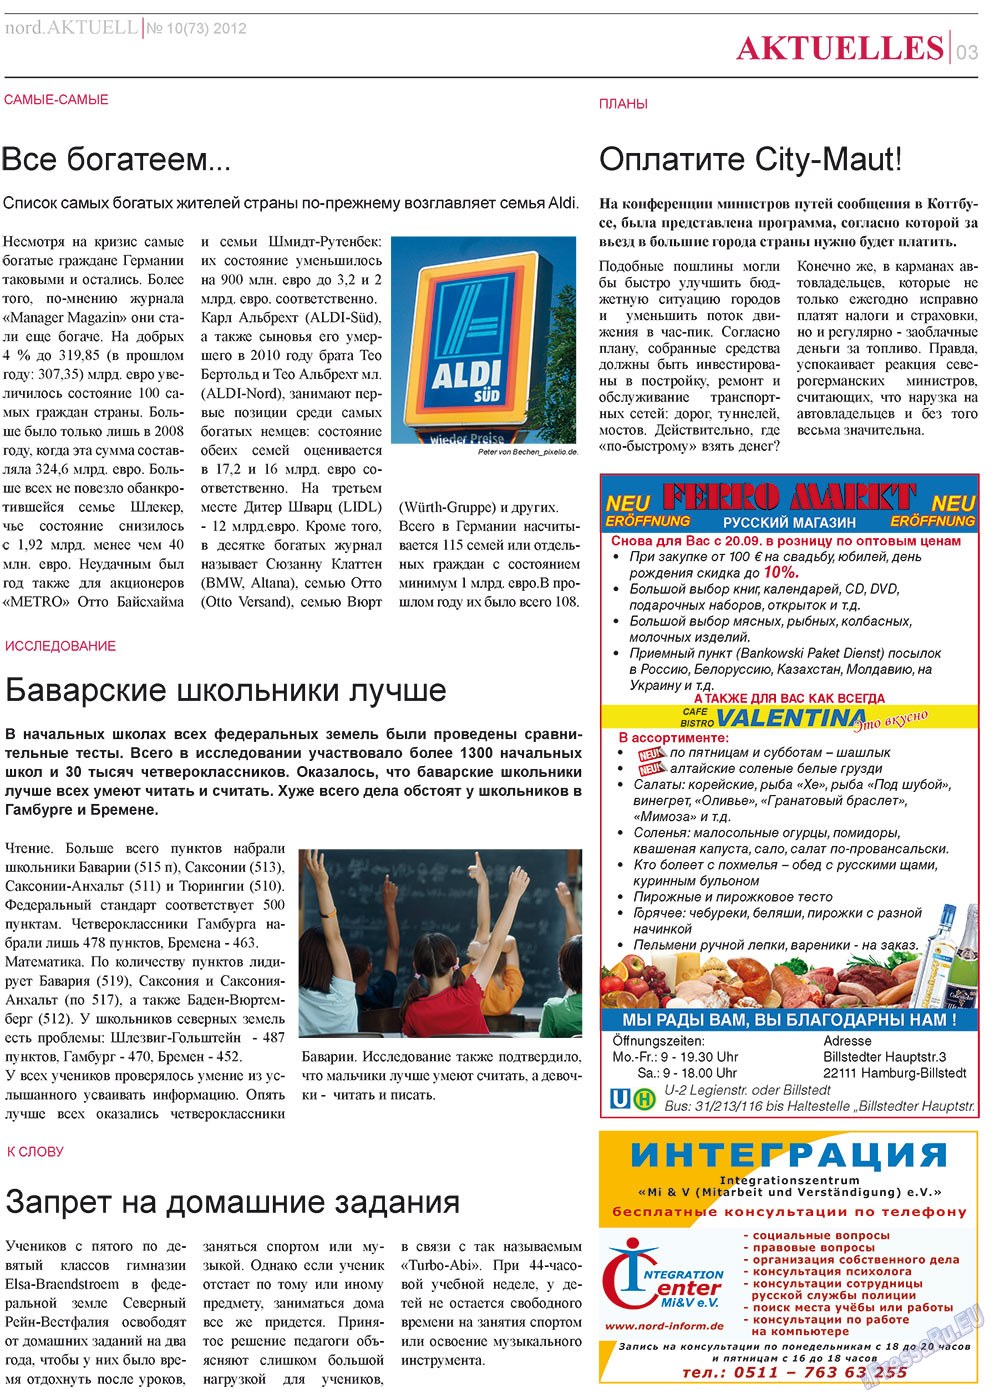 nord.Aktuell, газета. 2012 №10 стр.3